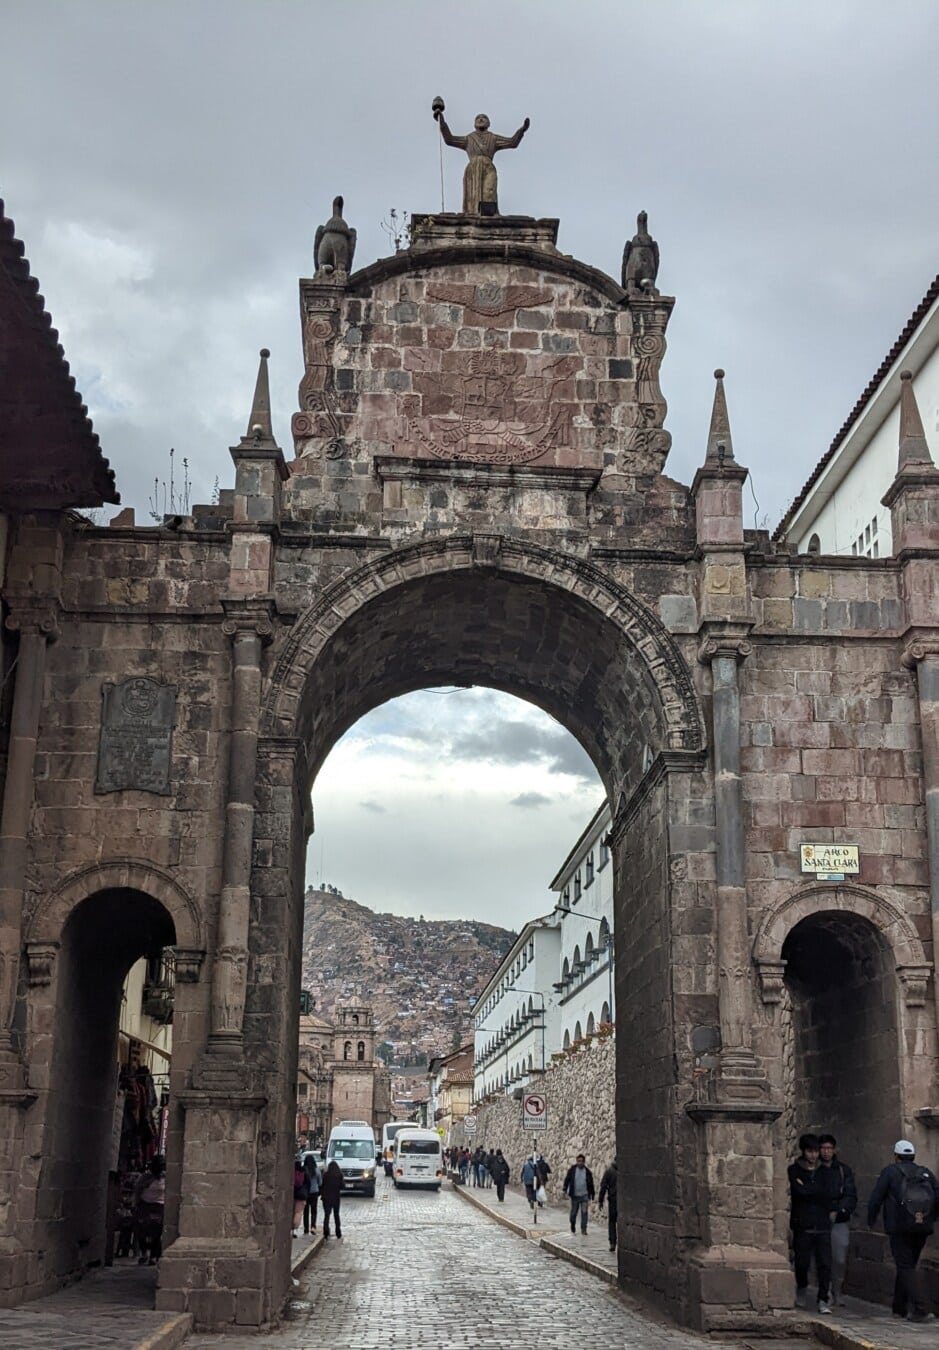 шлюз, арка, Перу, манастир, улица, в центъра, средновековна, паметник, архитектура, стар